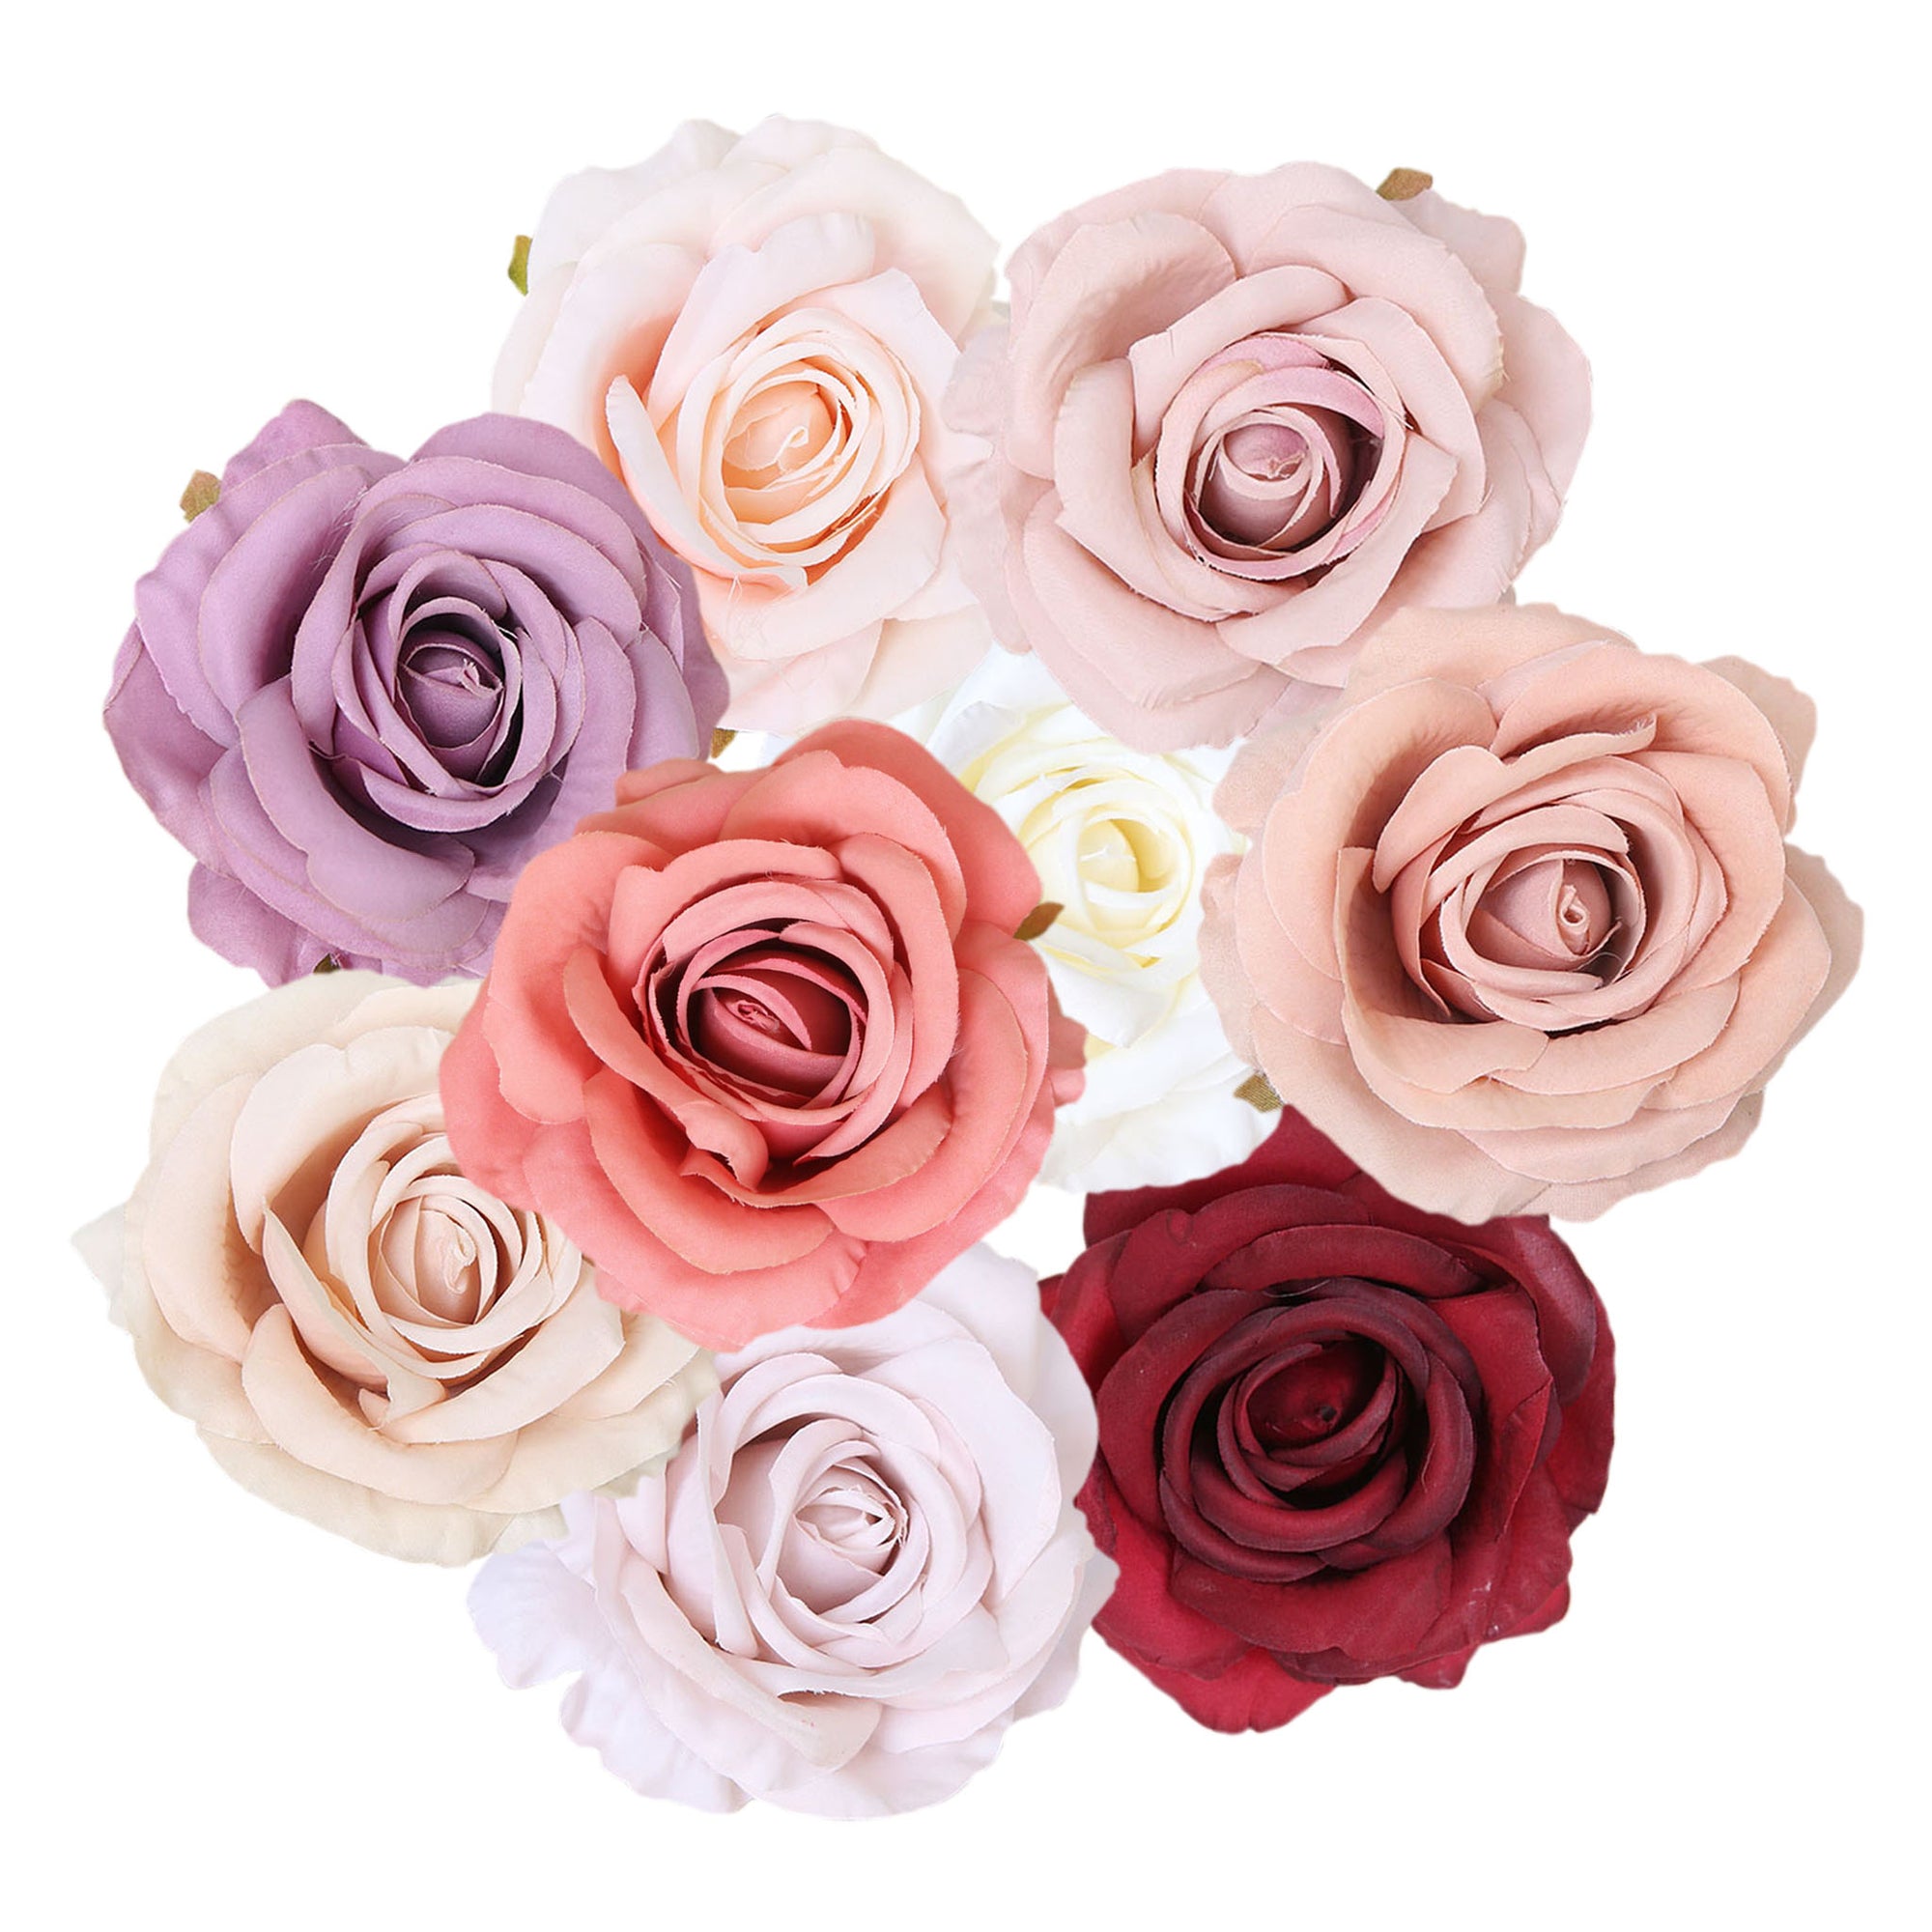 Wholesale Roses Silk Flower Heads